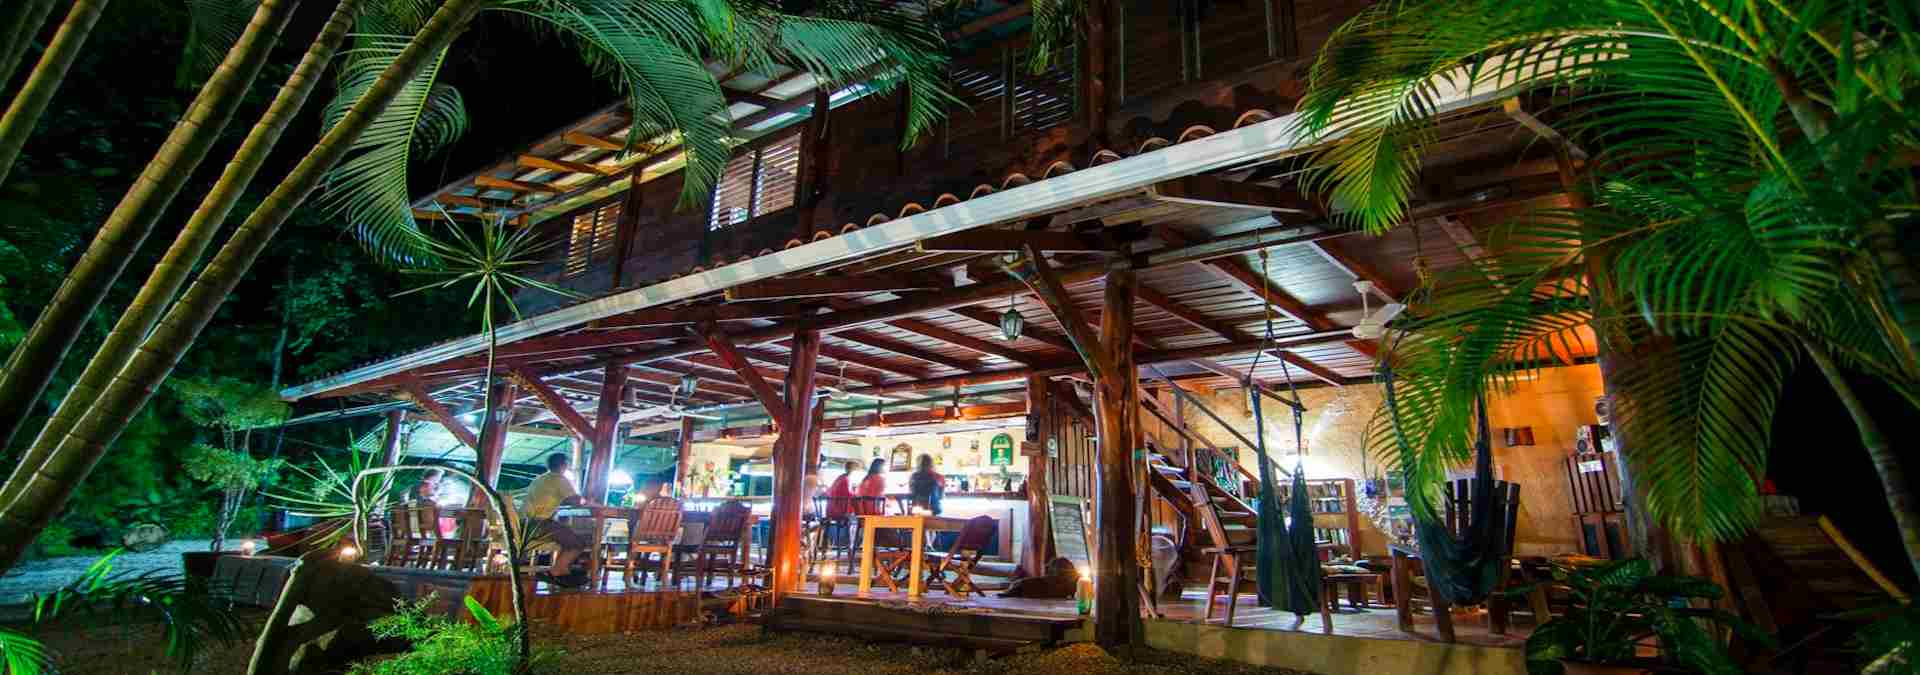 Funky Monkey Lodge in Santa Teresa Costa Rica